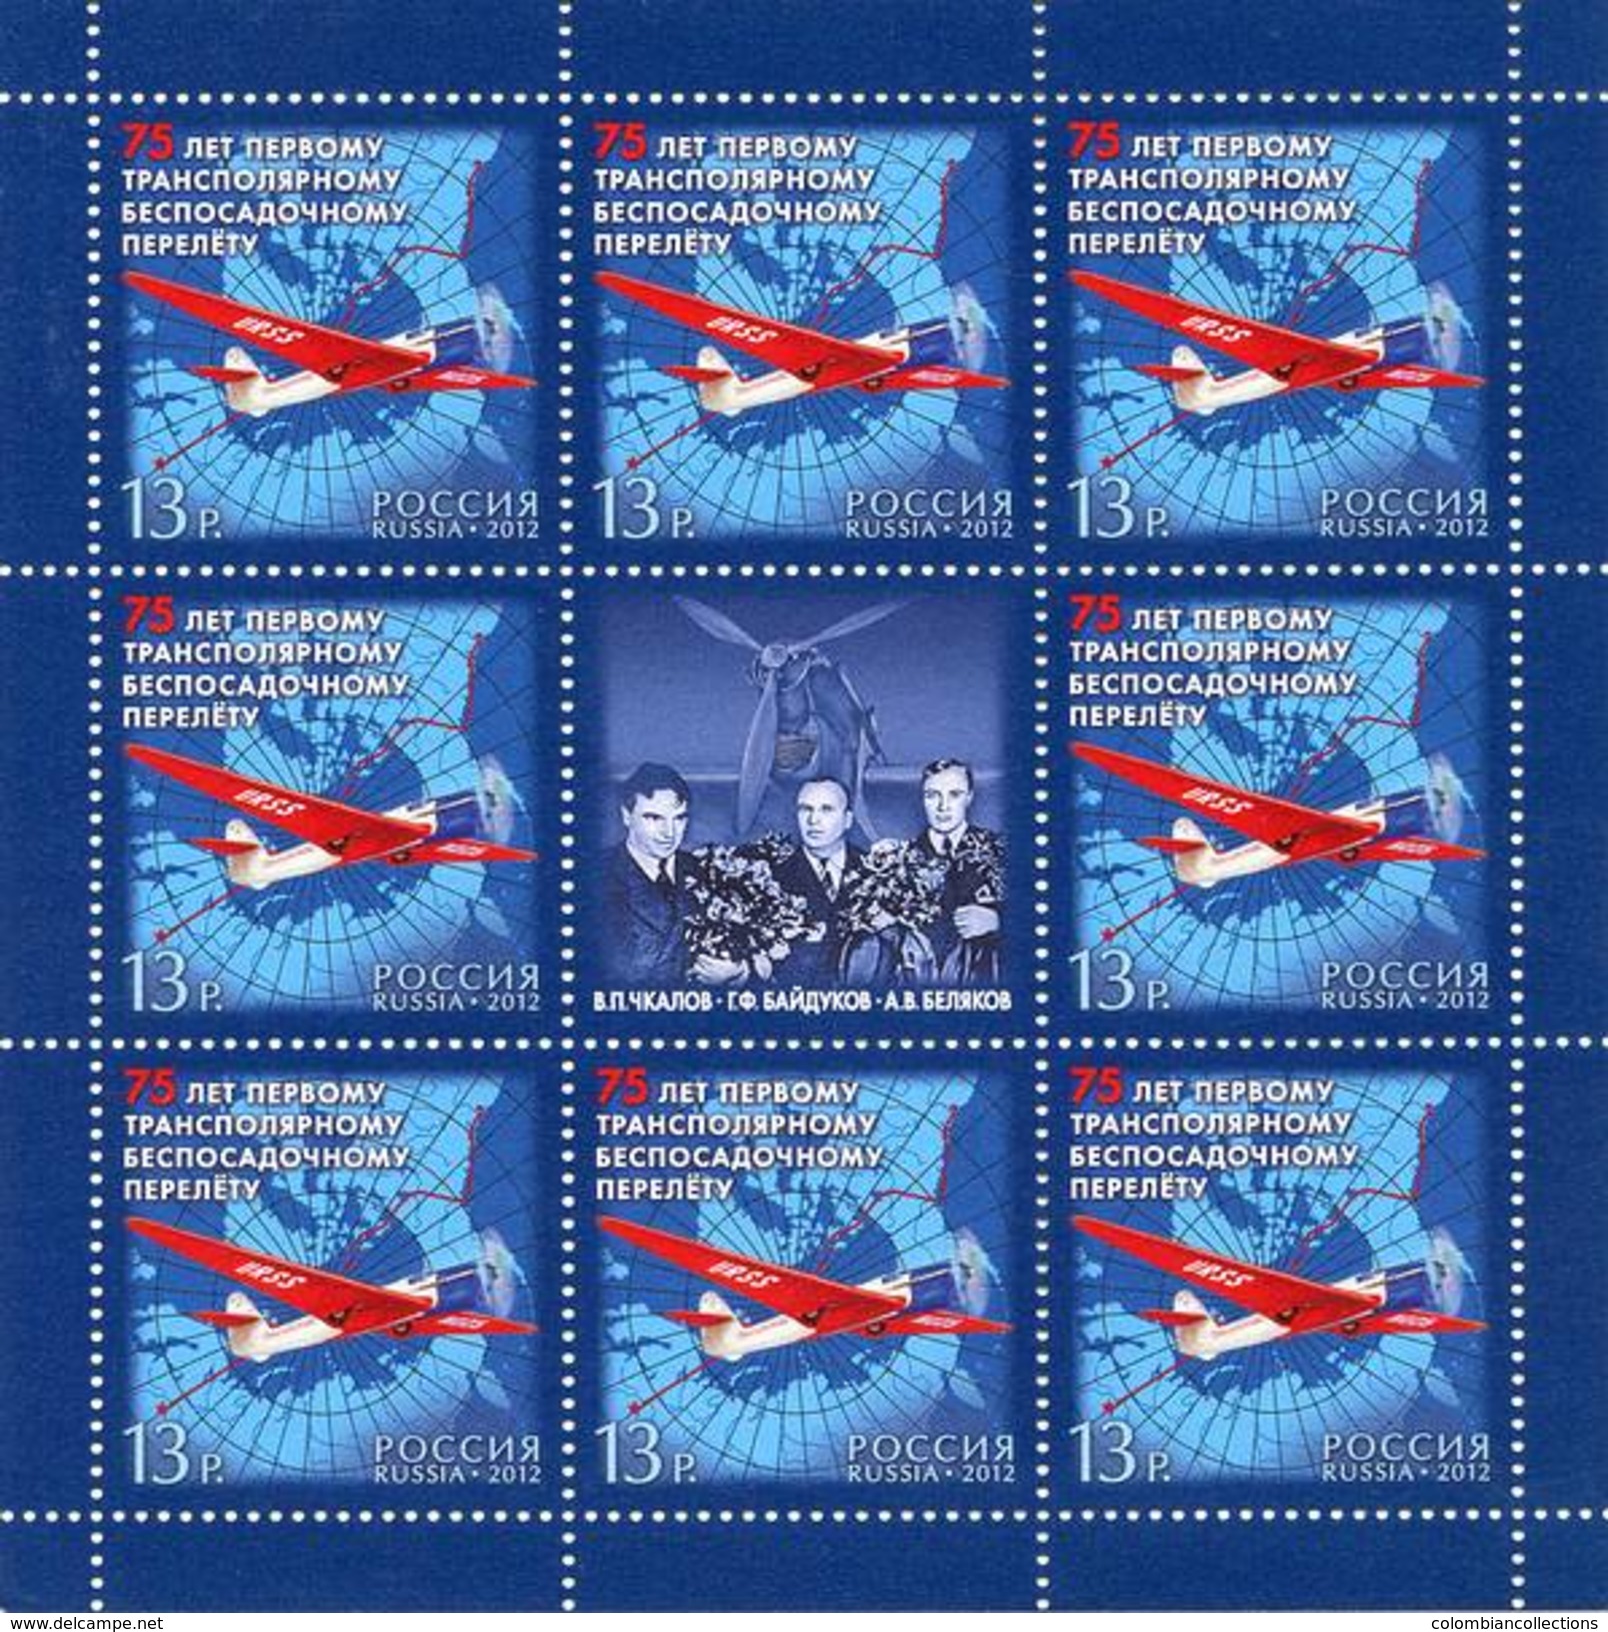 Lote 31217aP, 2012, Rusia, Russia, Pliego, Sheet, 75th Anniversary Of The Record Trans Polar Flight, Aircraft, Airman - FDC